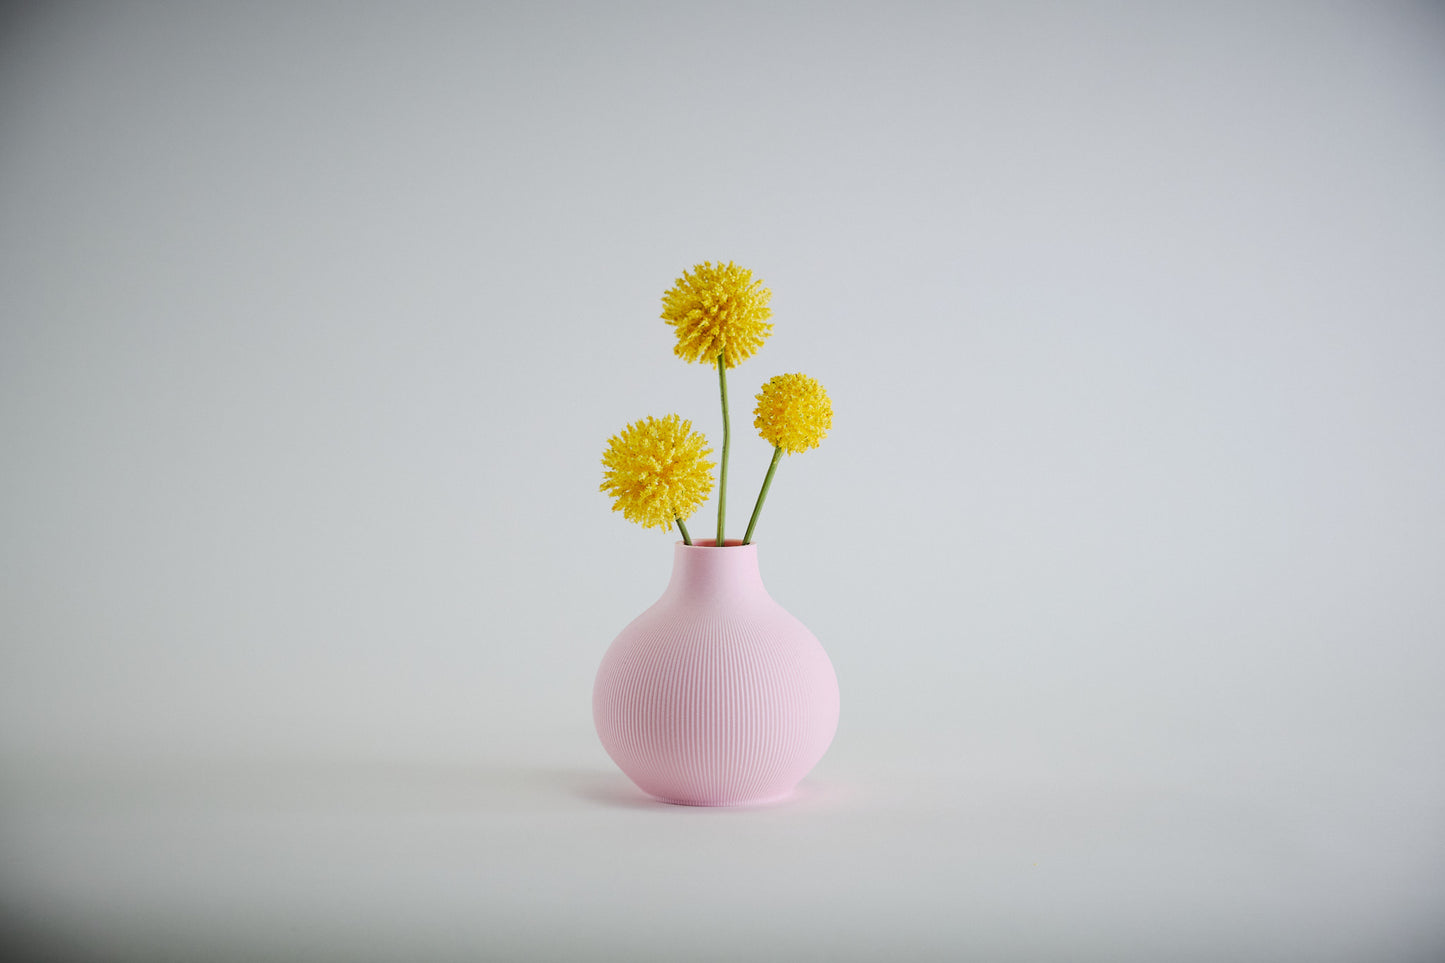 Aspen Vase  I  STYLE 03 Round - Honey and Ivy 